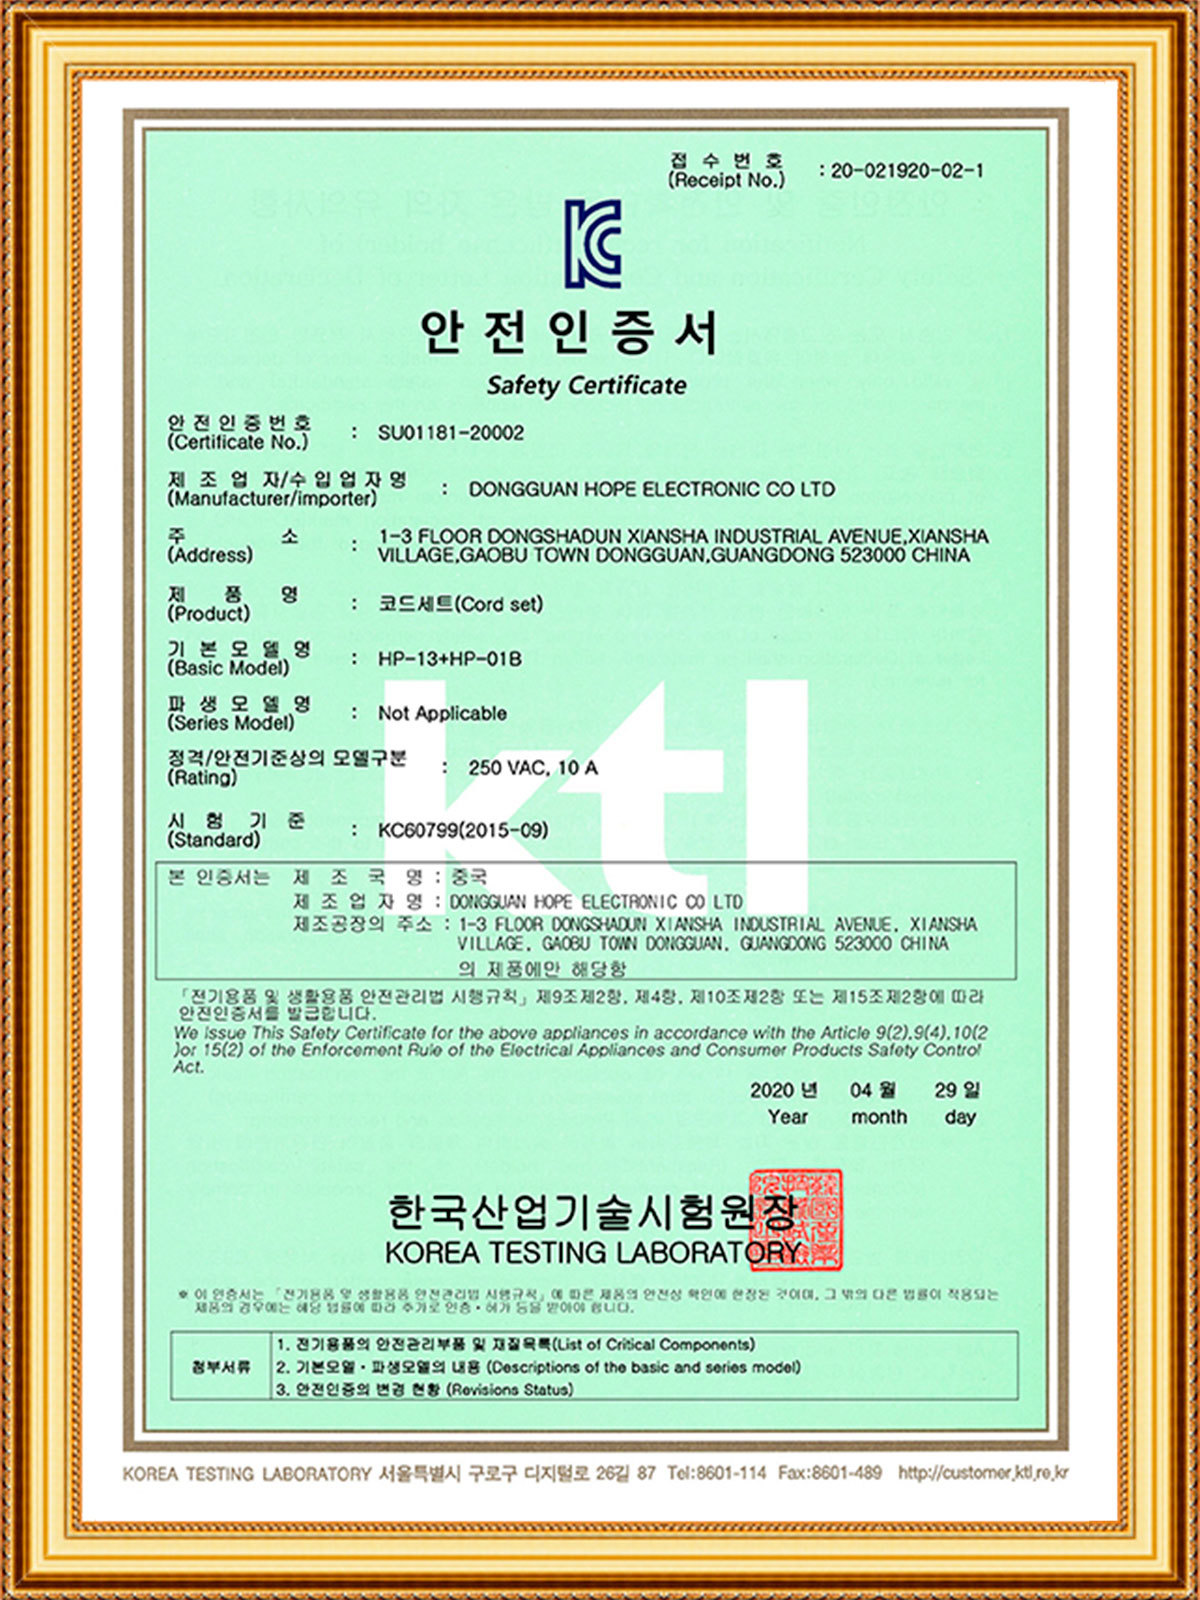 Korean KC certificate